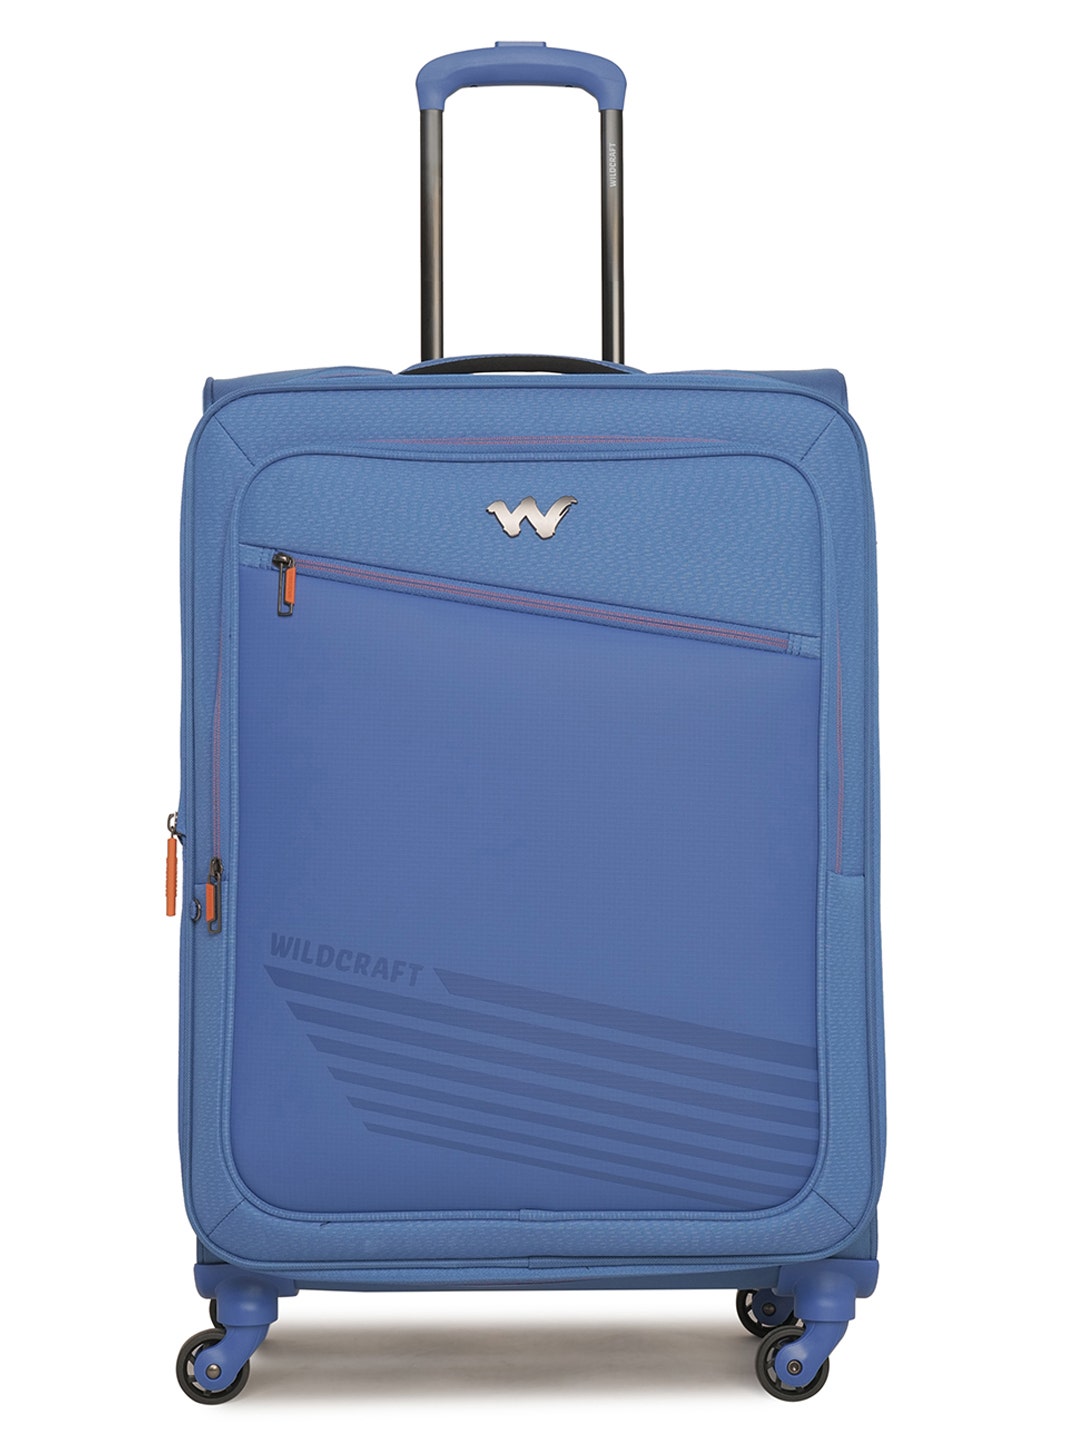 Wildcraft BARREL BAG Duffle Bag in bulk for corporate gifting | Wildcraft  Duffle, Carry Bags wholesale distributor & supplier in Mumbai India